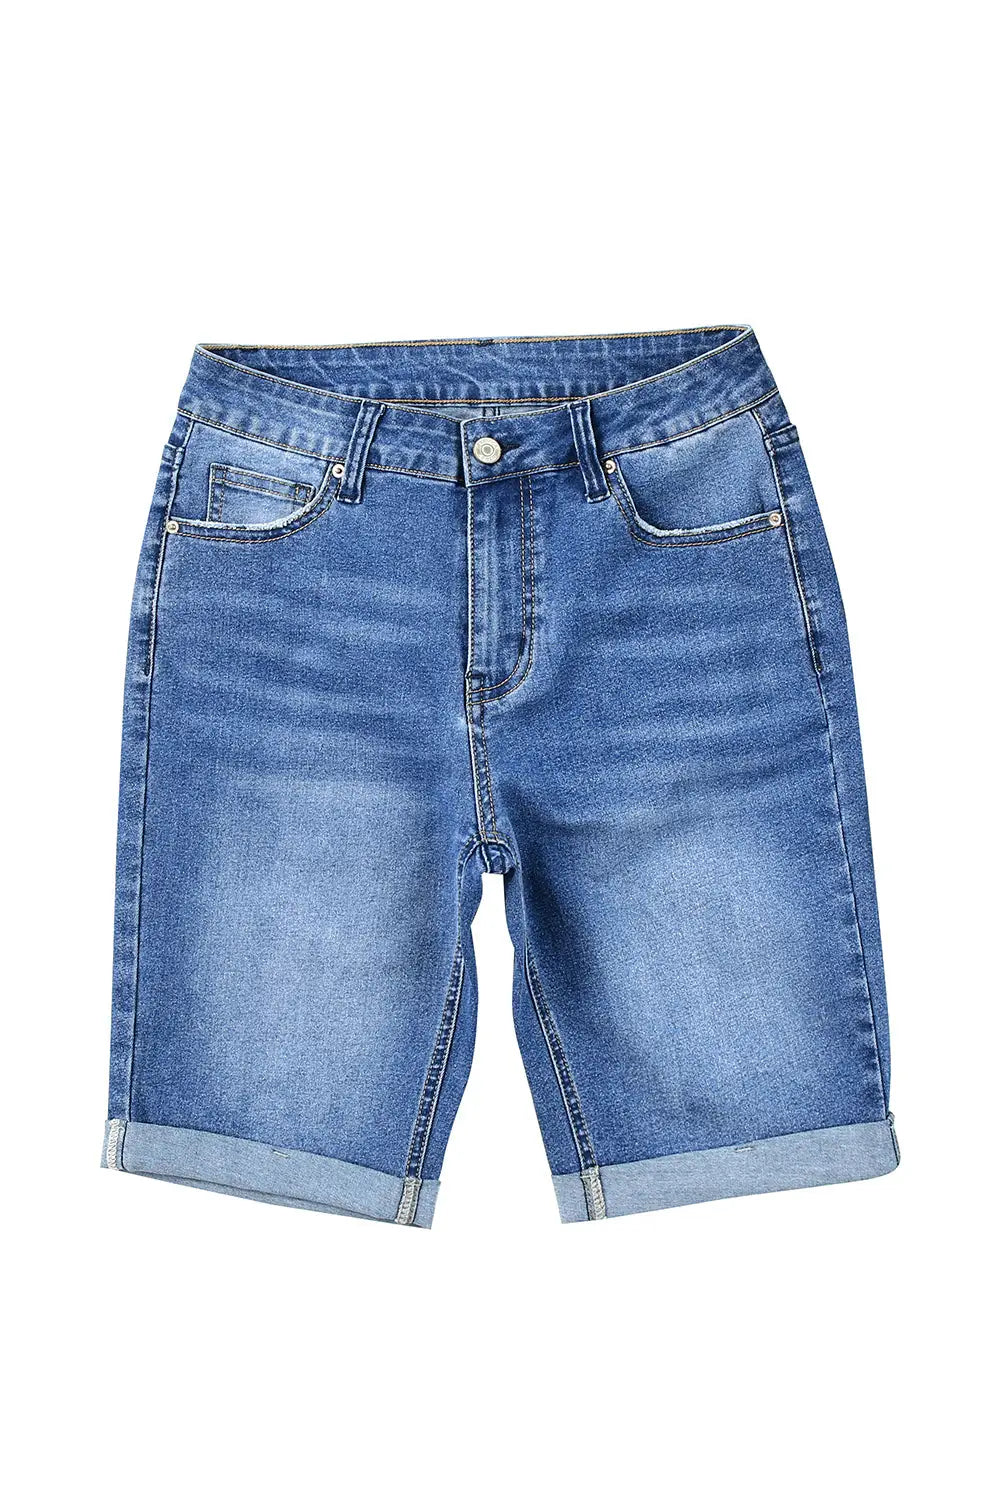 Sky Blue Acid Wash Roll-up Edge Bermuda Short Jeans-19